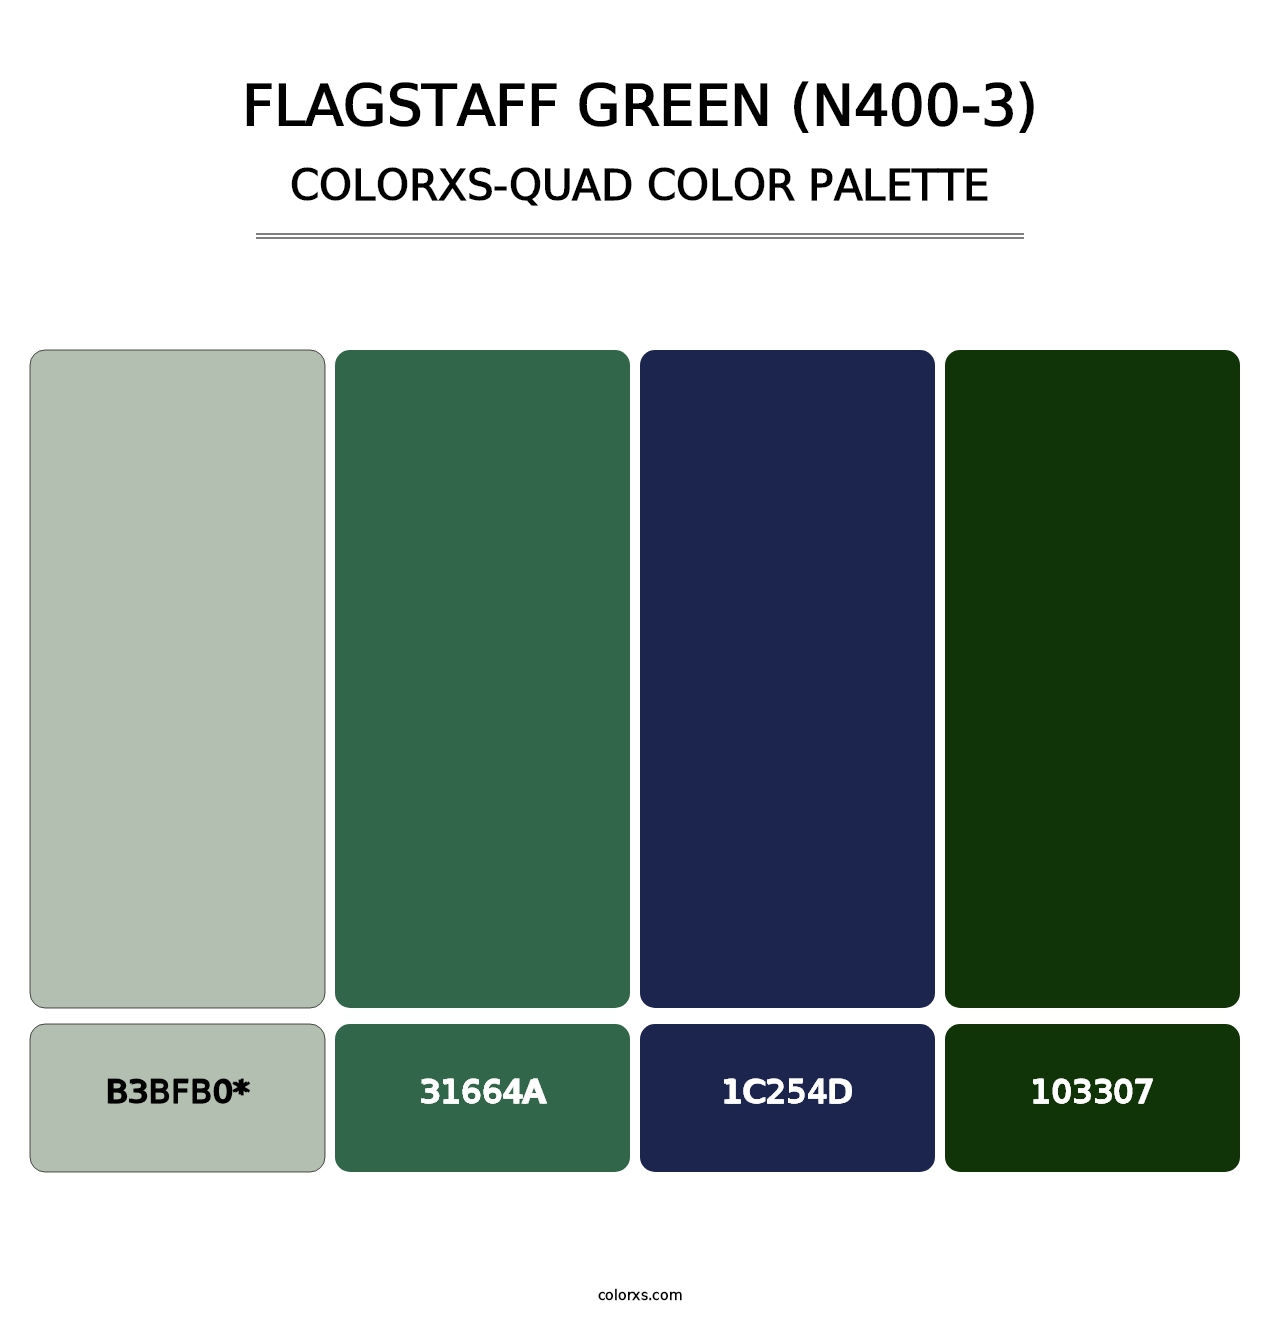 Flagstaff Green (N400-3) - Colorxs Quad Palette